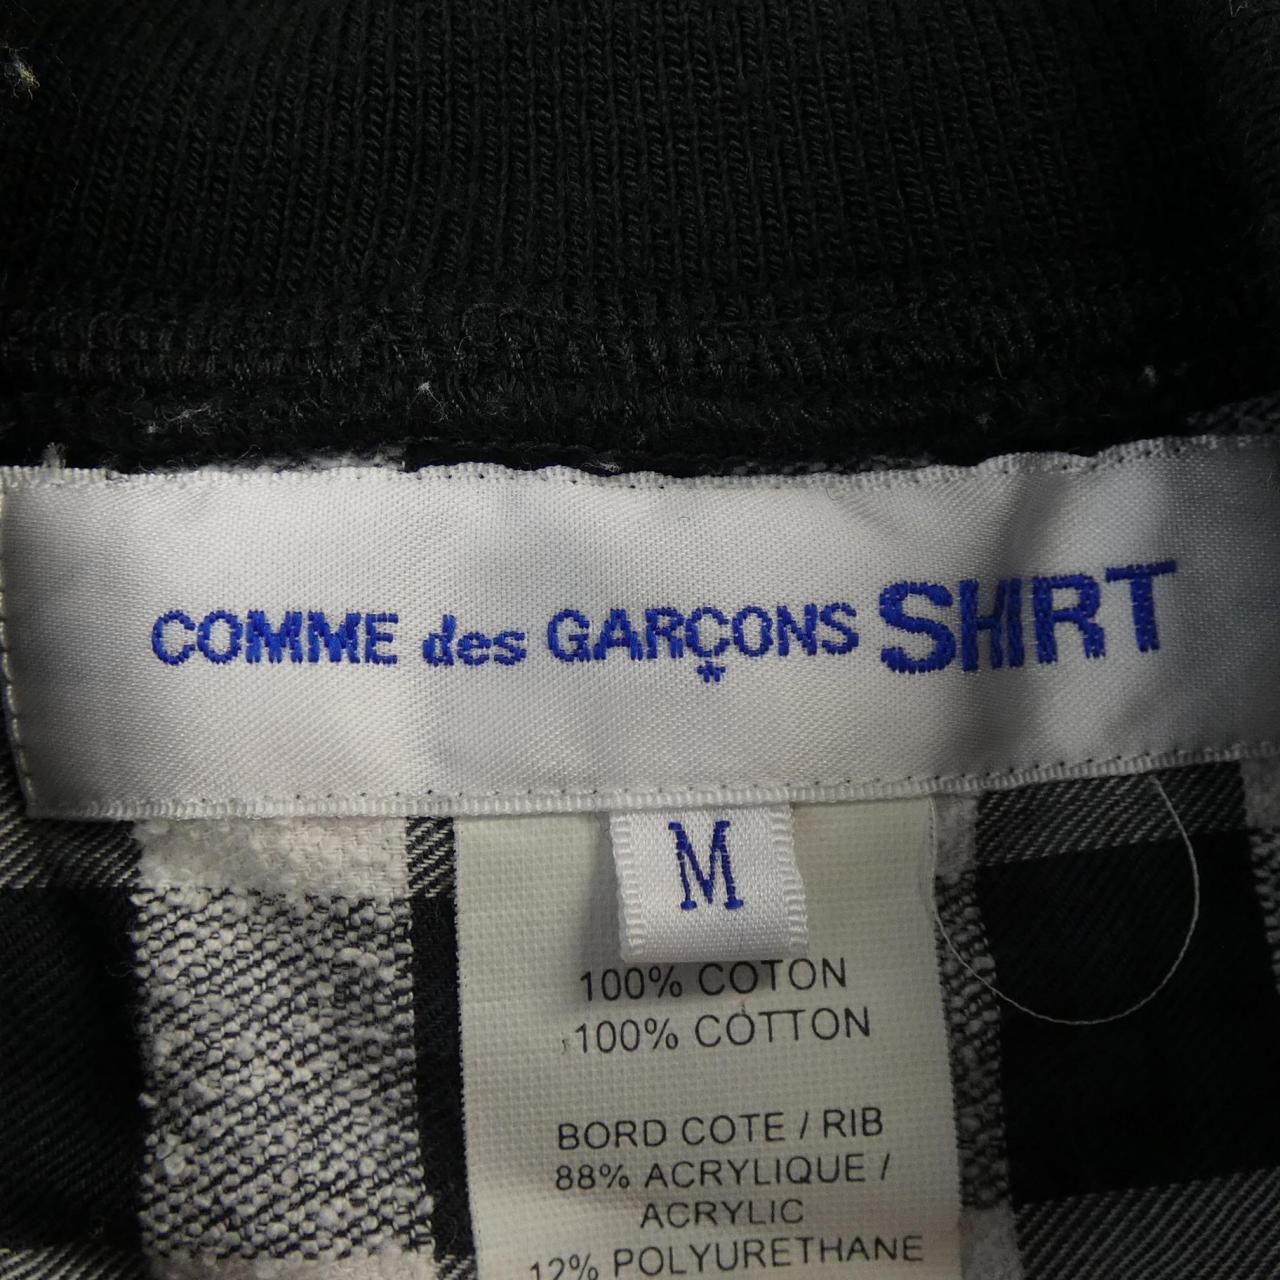 COMDEL GARCONS SHIRT襯衫